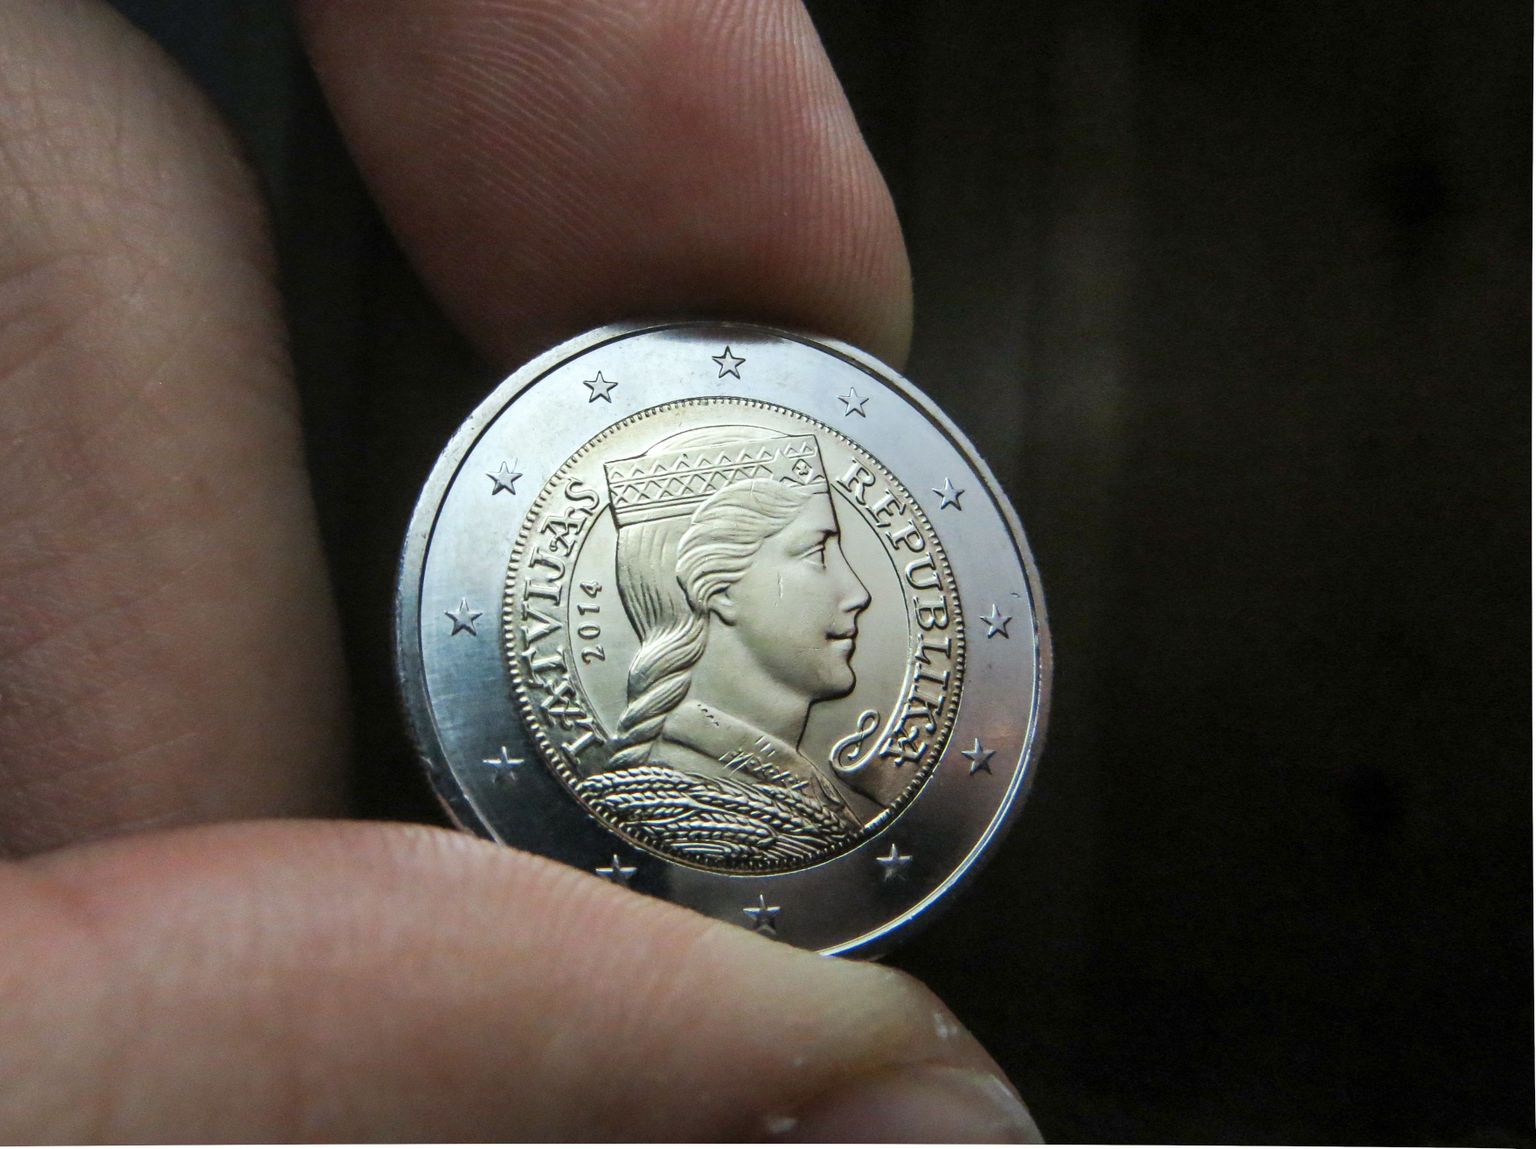 Läti sümboolikaga euro münt.